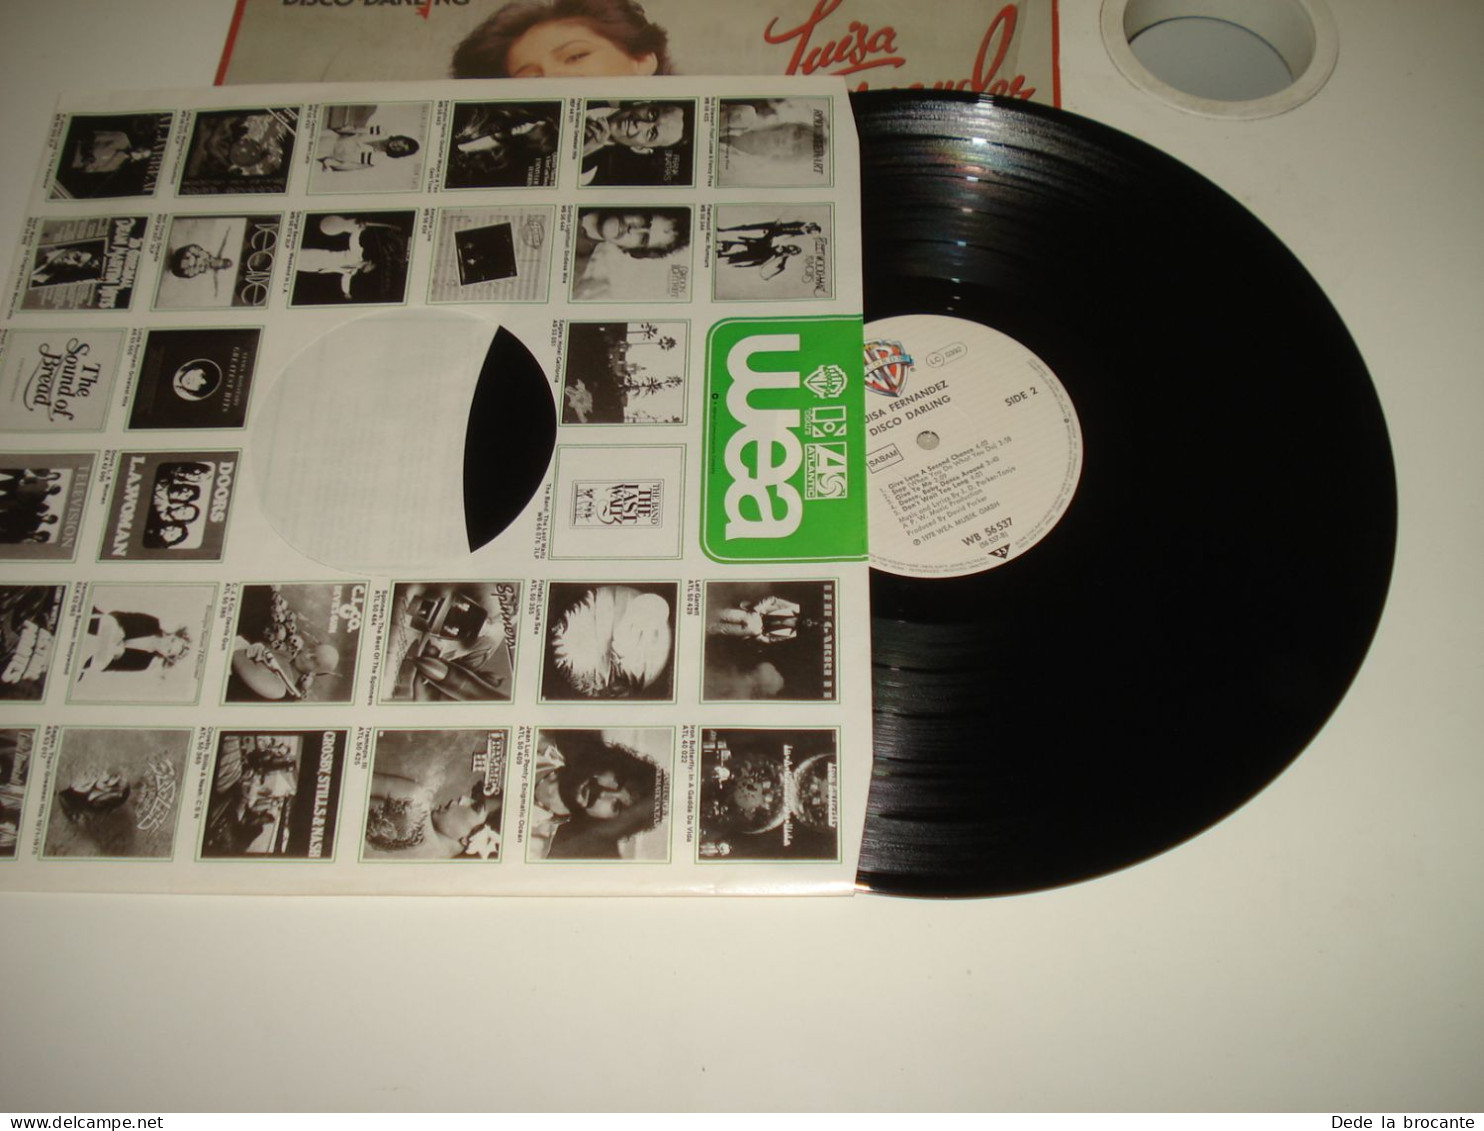 B14 / Luisa Fernandez – Disco Darling - LP -  WB 56 537 - Be  1978 M/EX - Disco, Pop